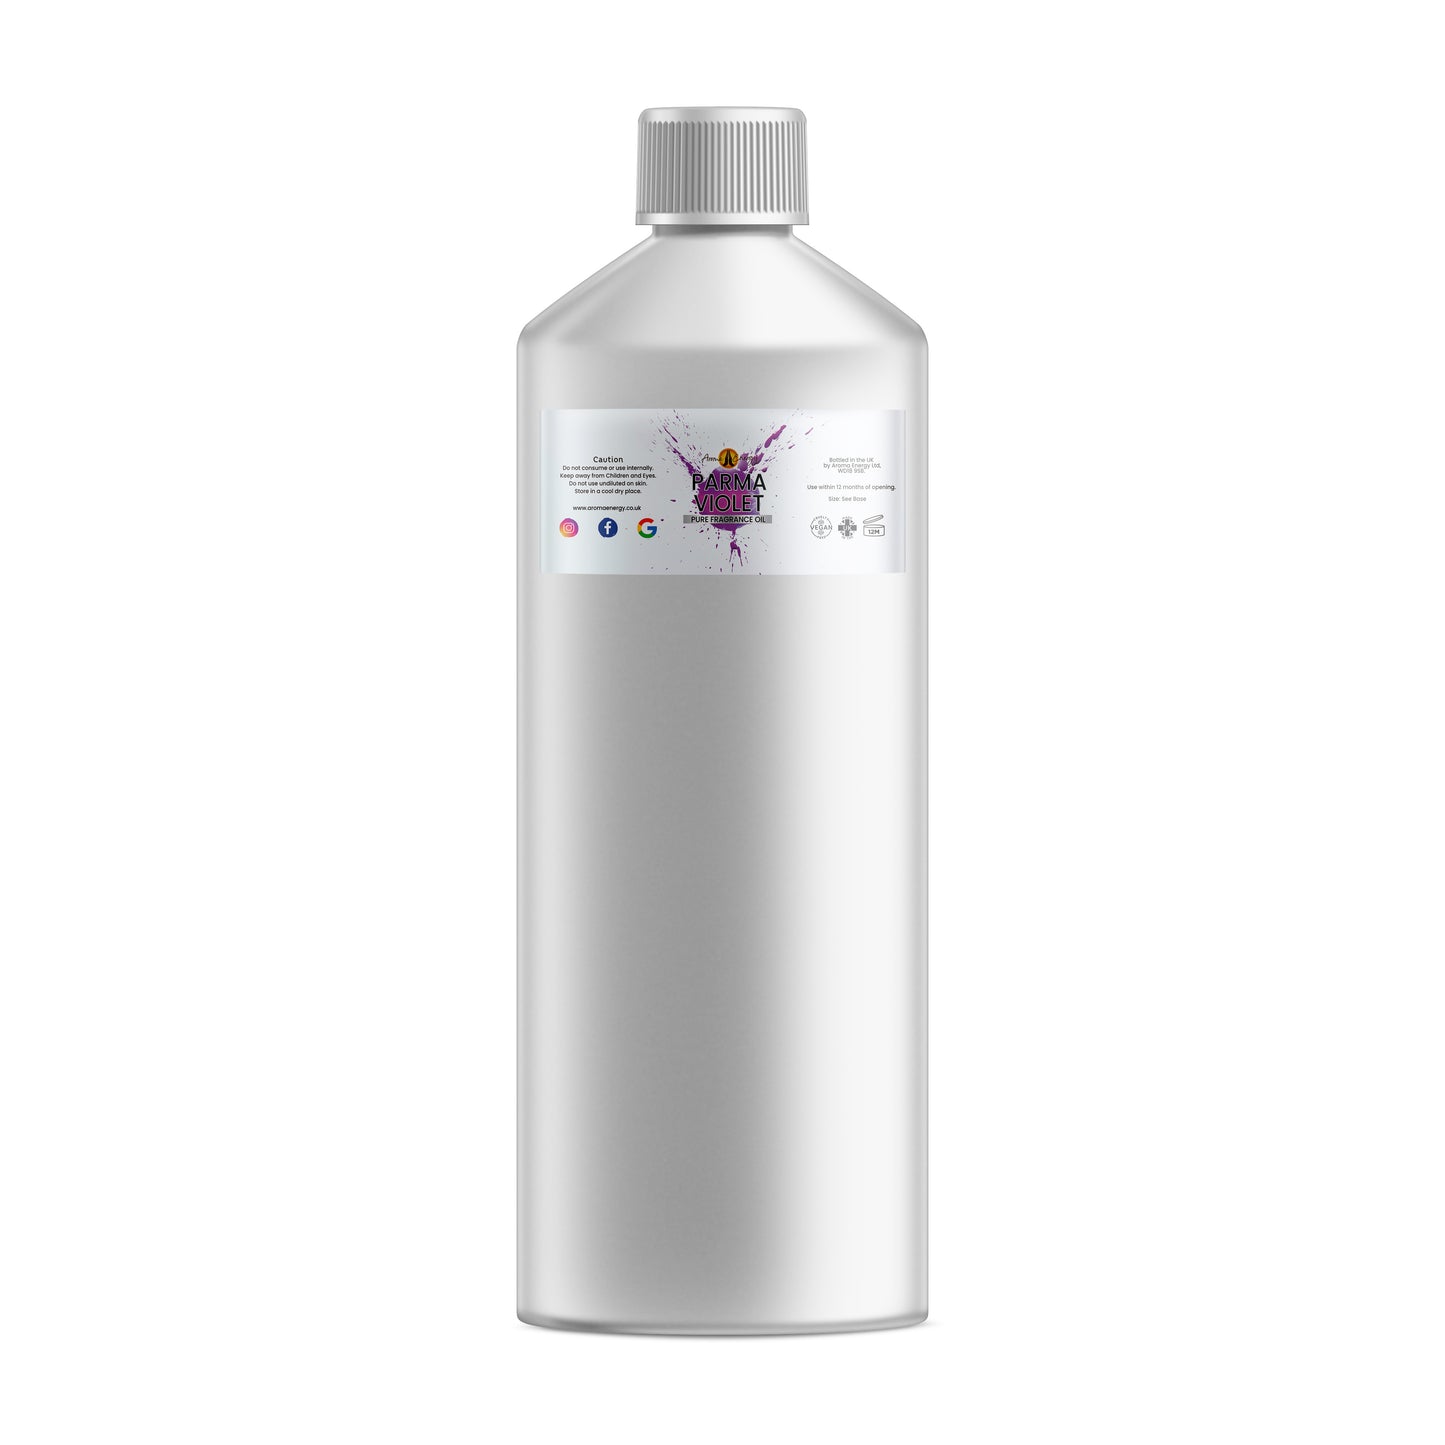 Parma Violet Fragrance Oil - Aroma Energy